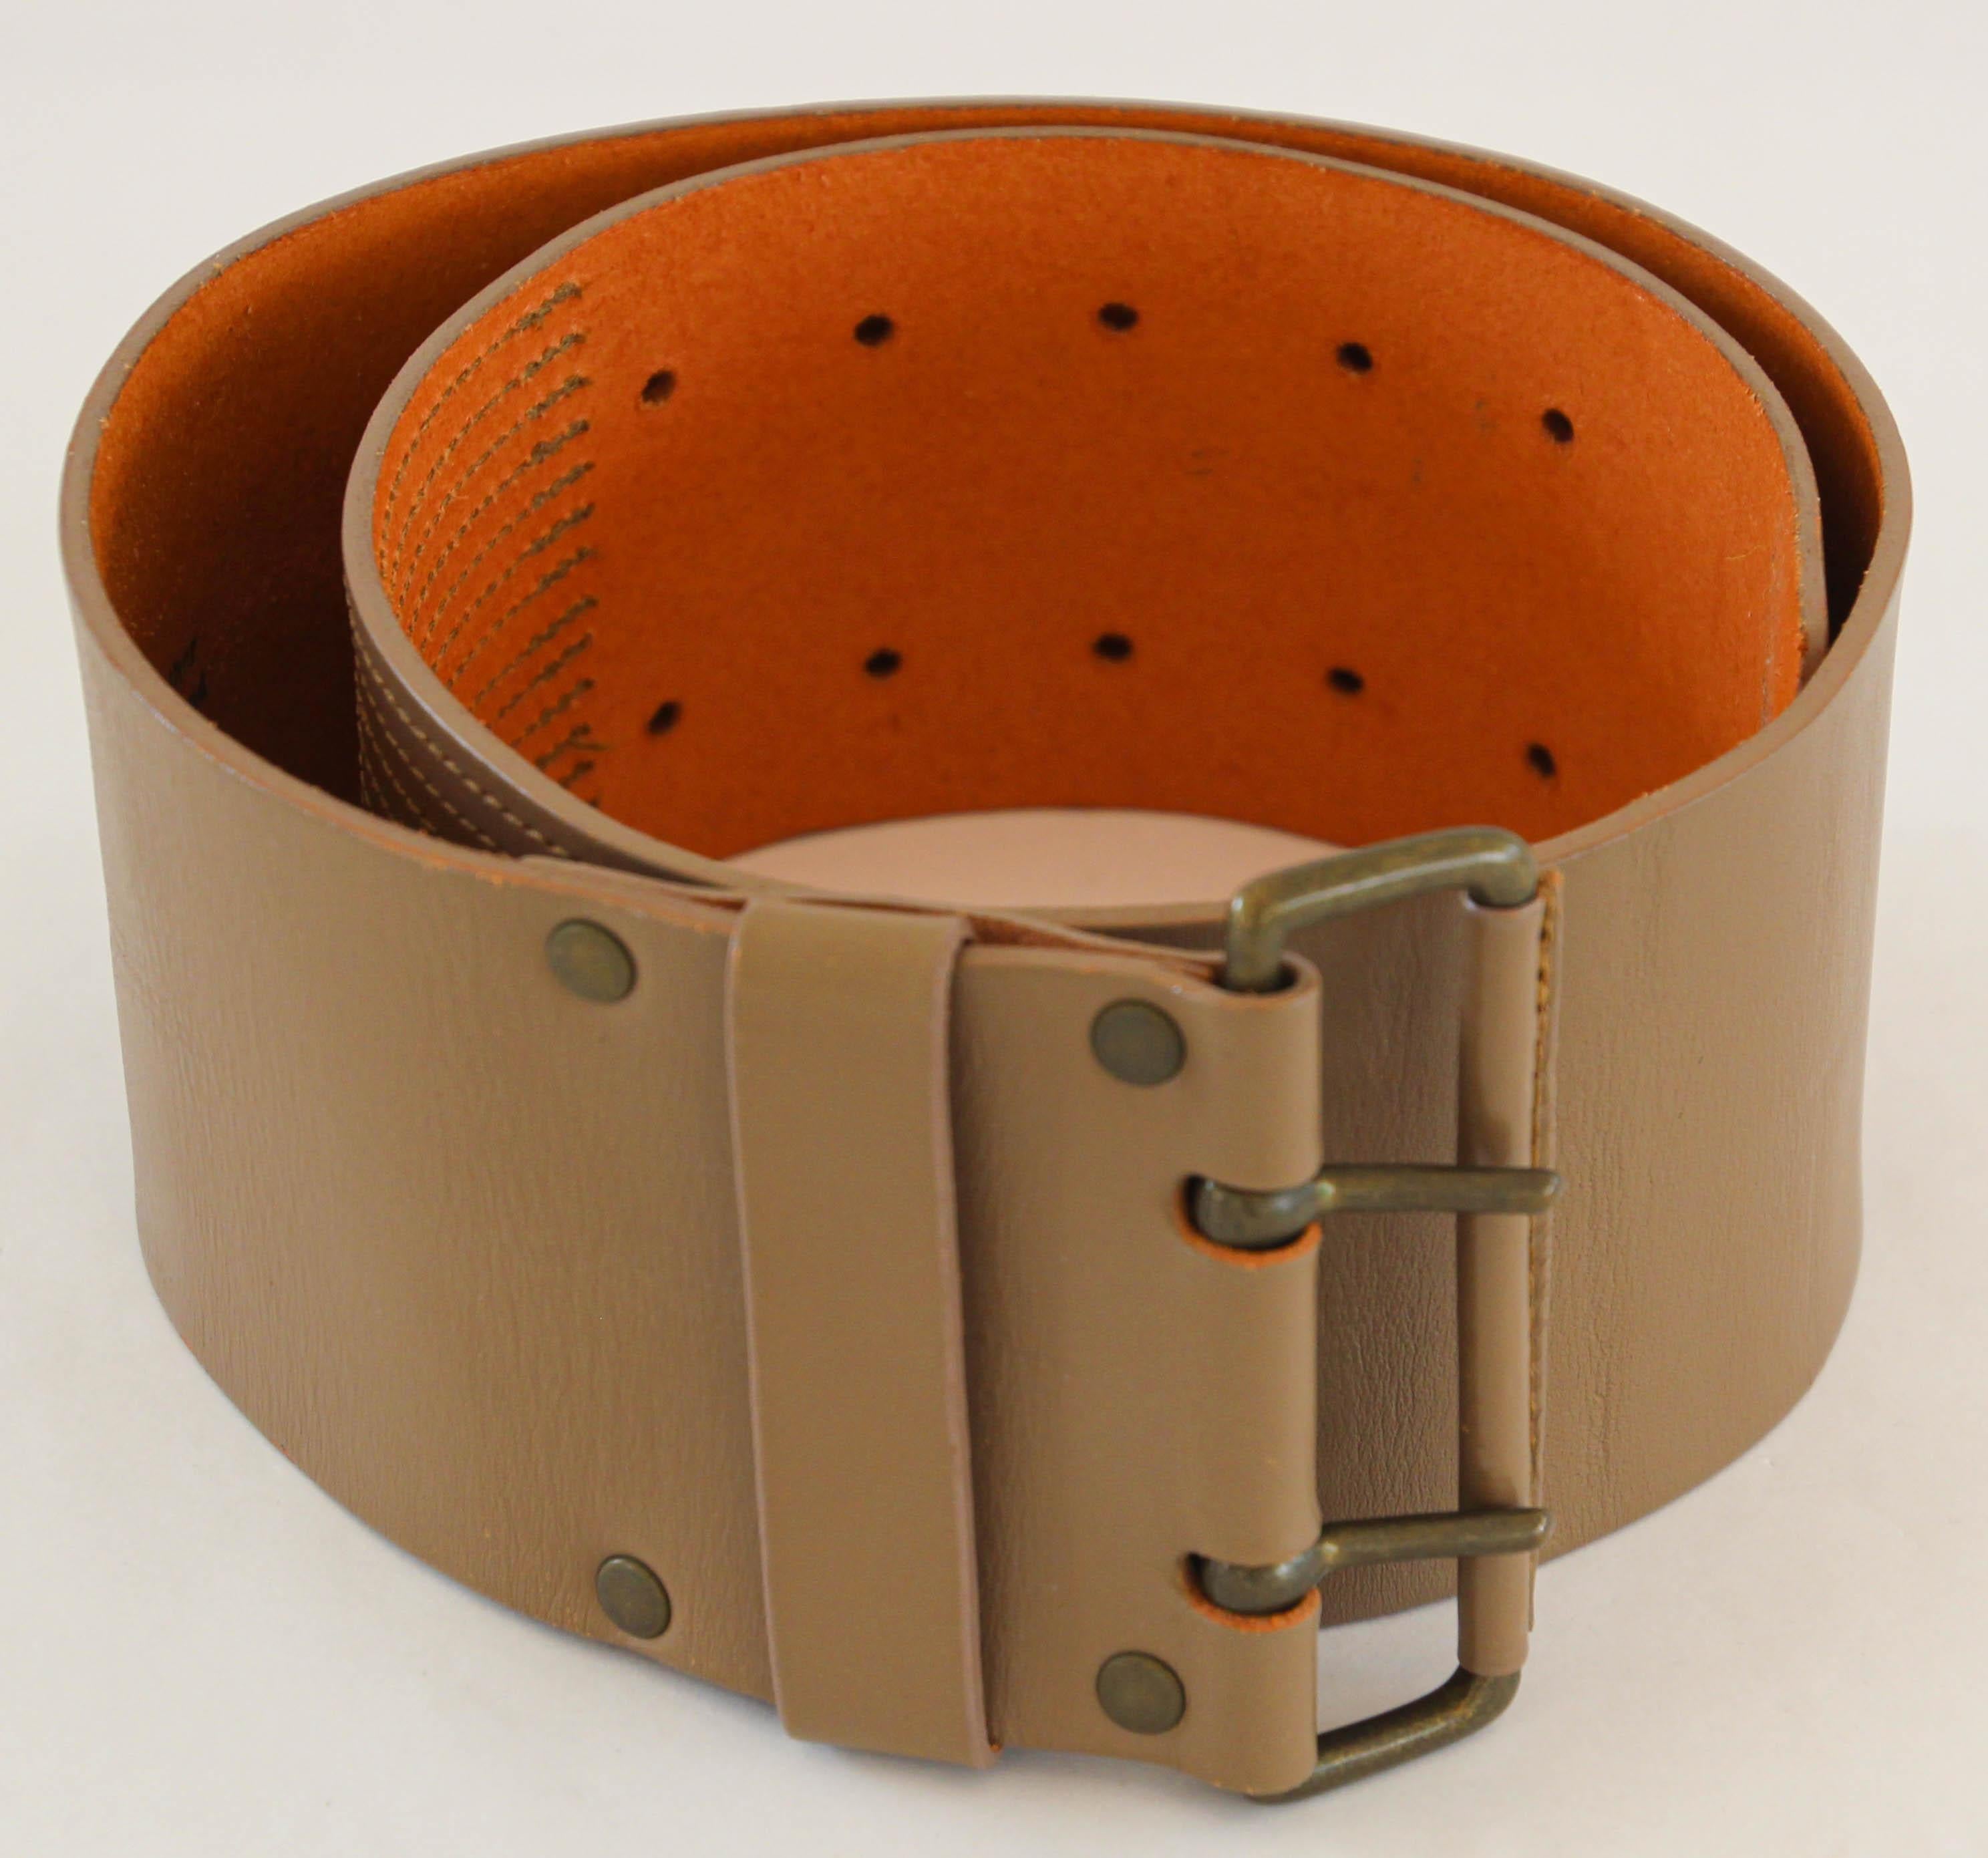 Dries Van Noten Wide Leather Belt.
Dries Van Noten Oversized Military Wide Belt.
Stamped on inside leather. 
Dries Van Noten, 
Real Leather, 
100% Calf Leather,
Made in England.
Size 75 / 30in.
Width 3.25